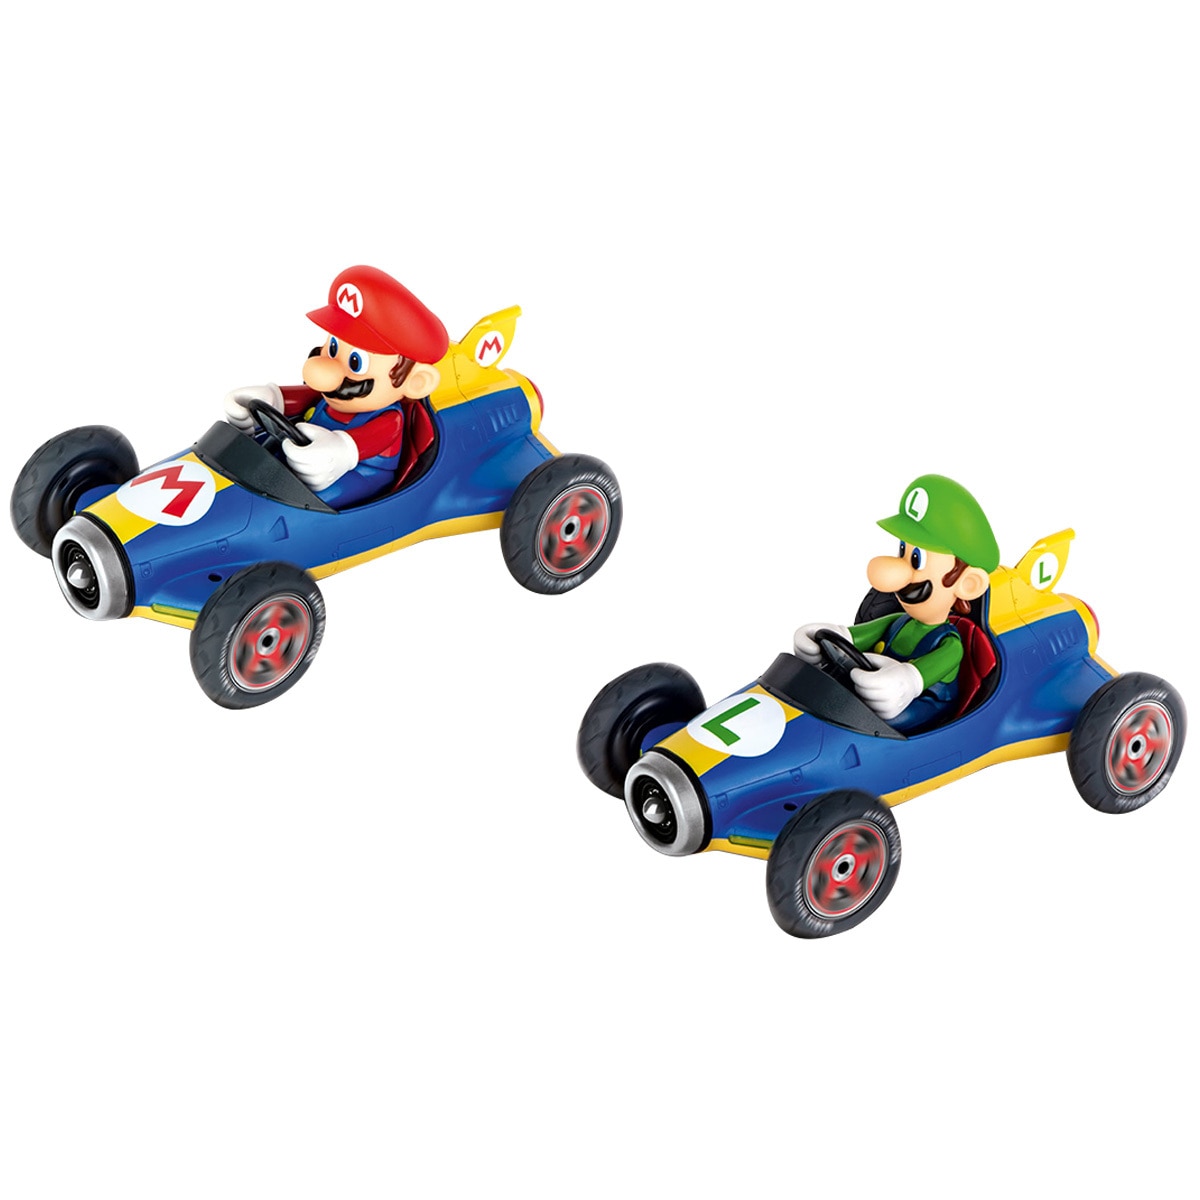 Carrera Mario Kart Remote Controlled Mario and Luigi 2 Pack